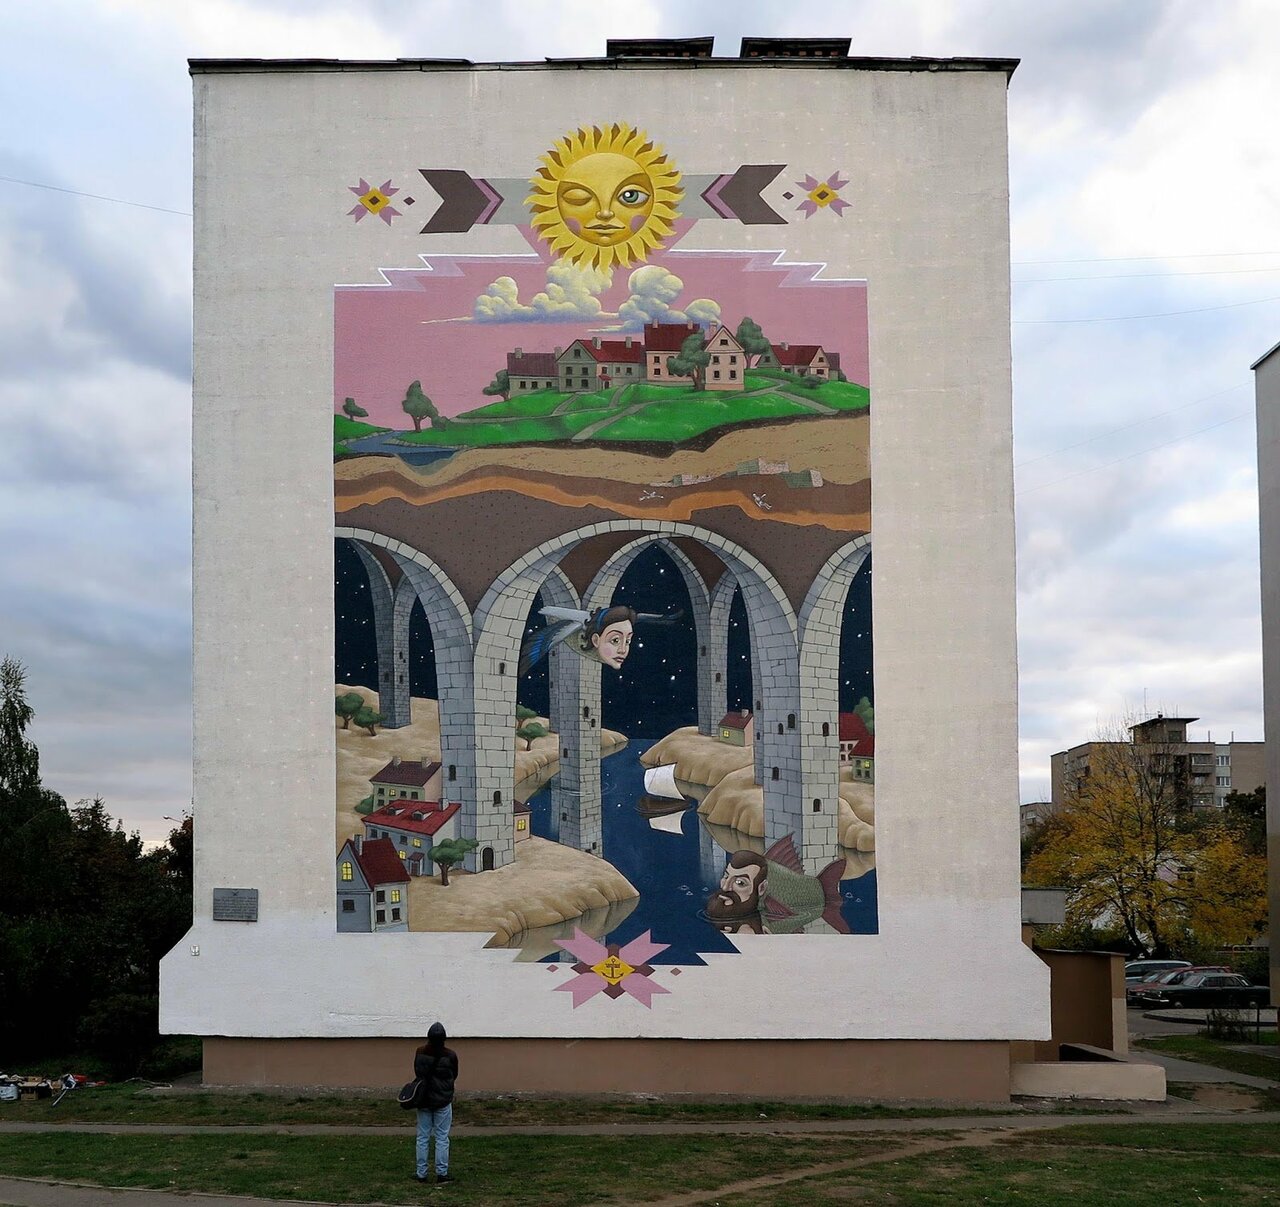 Kislow produces a new mural in Minsk, Belarus. #StreetArt #Graffiti #Mural https://t.co/tMF9c5ePI5